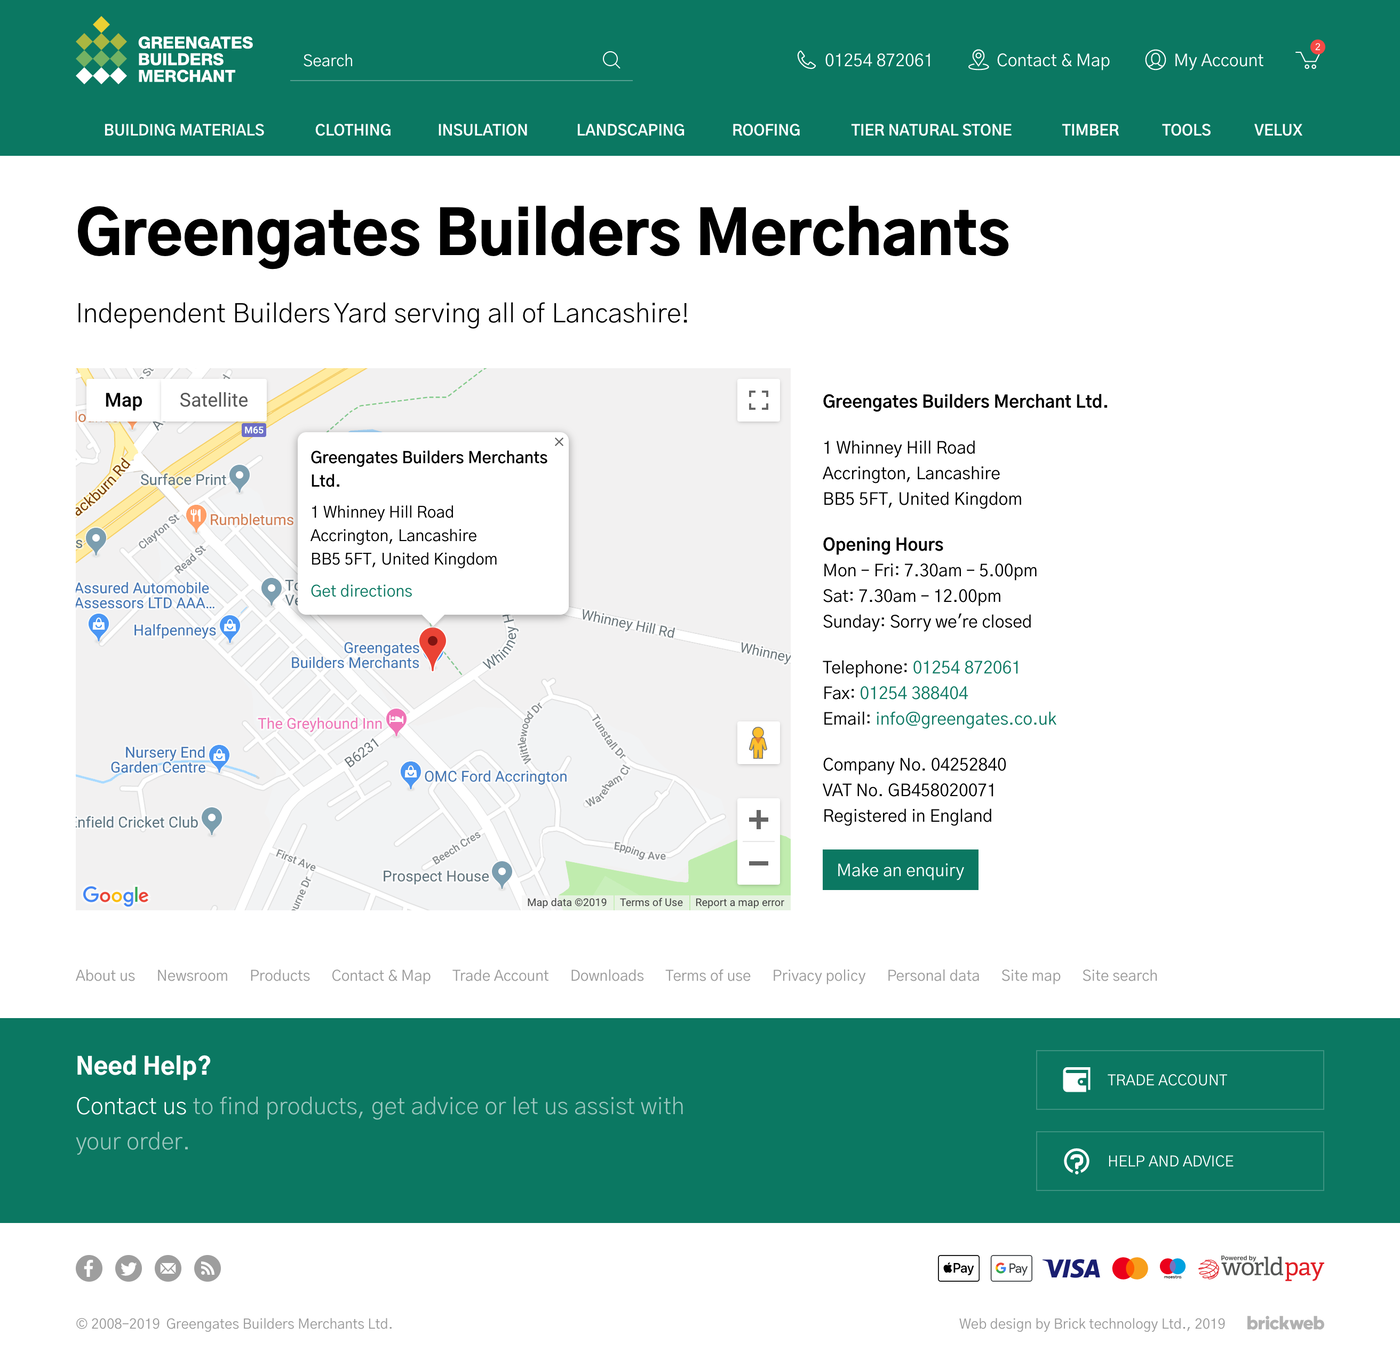 Greengates Builders Merchants Contact us